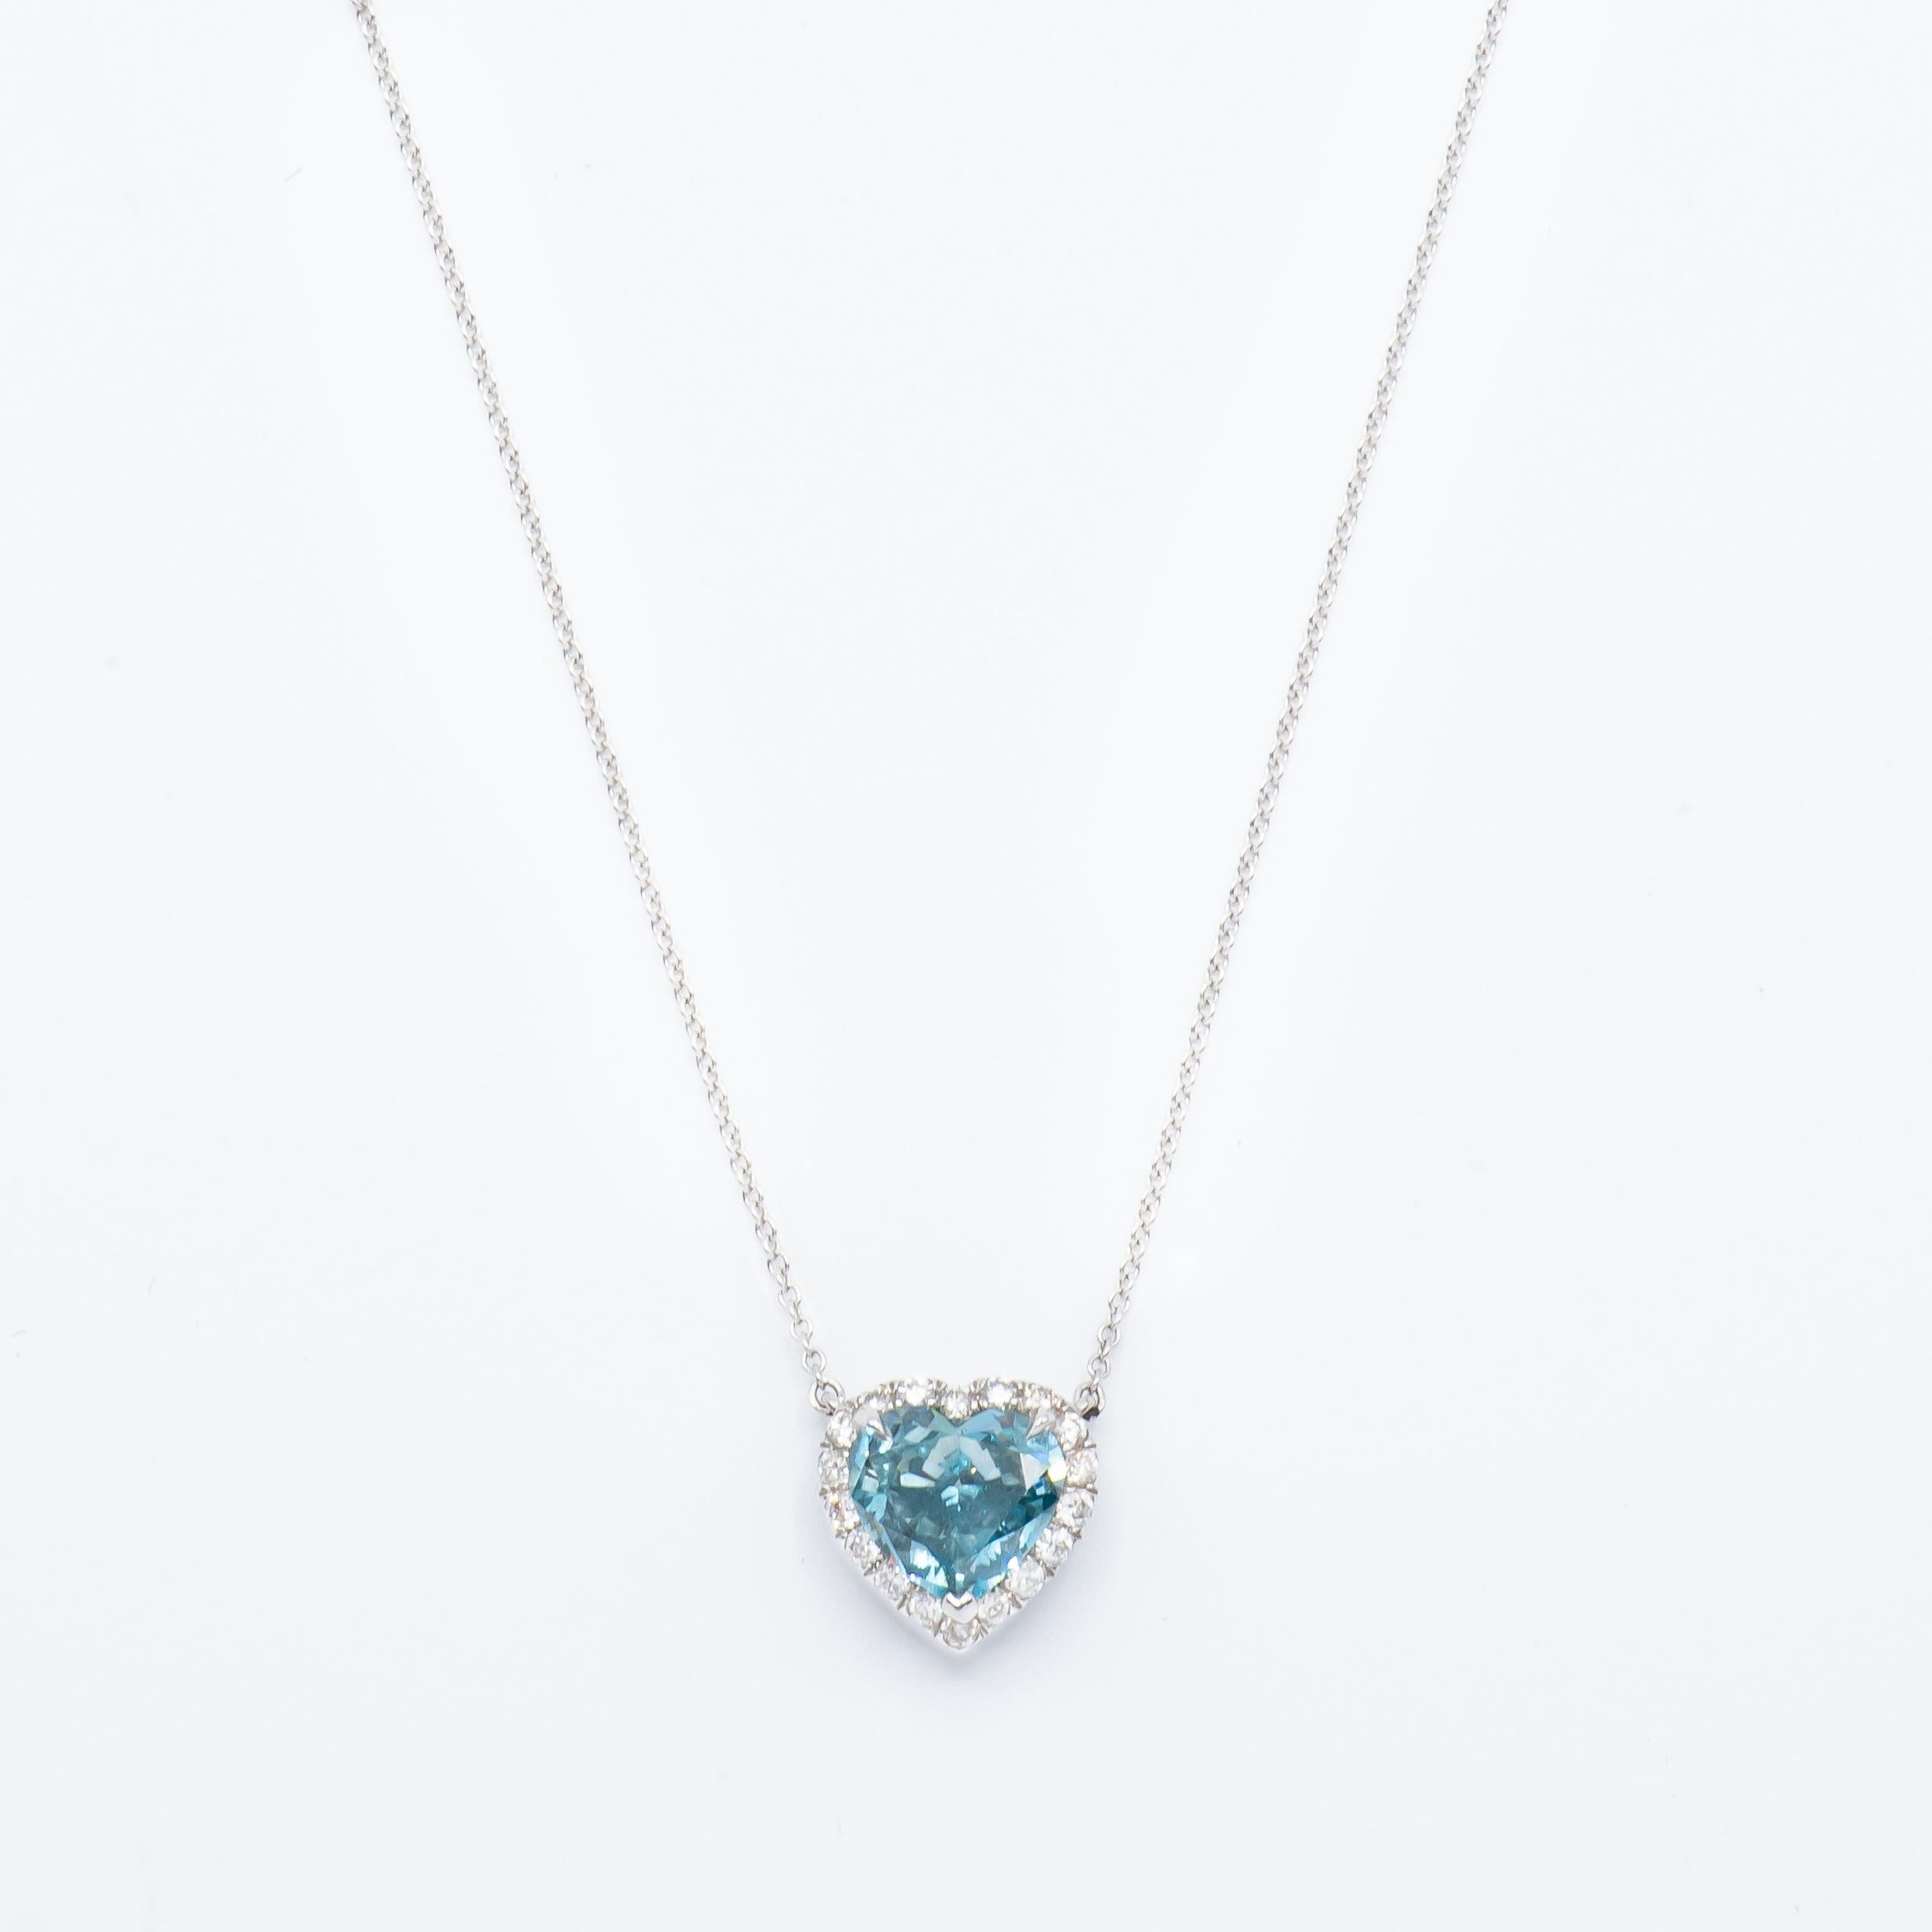 Over 2 Carat of Fancy Intense Blue Diamond